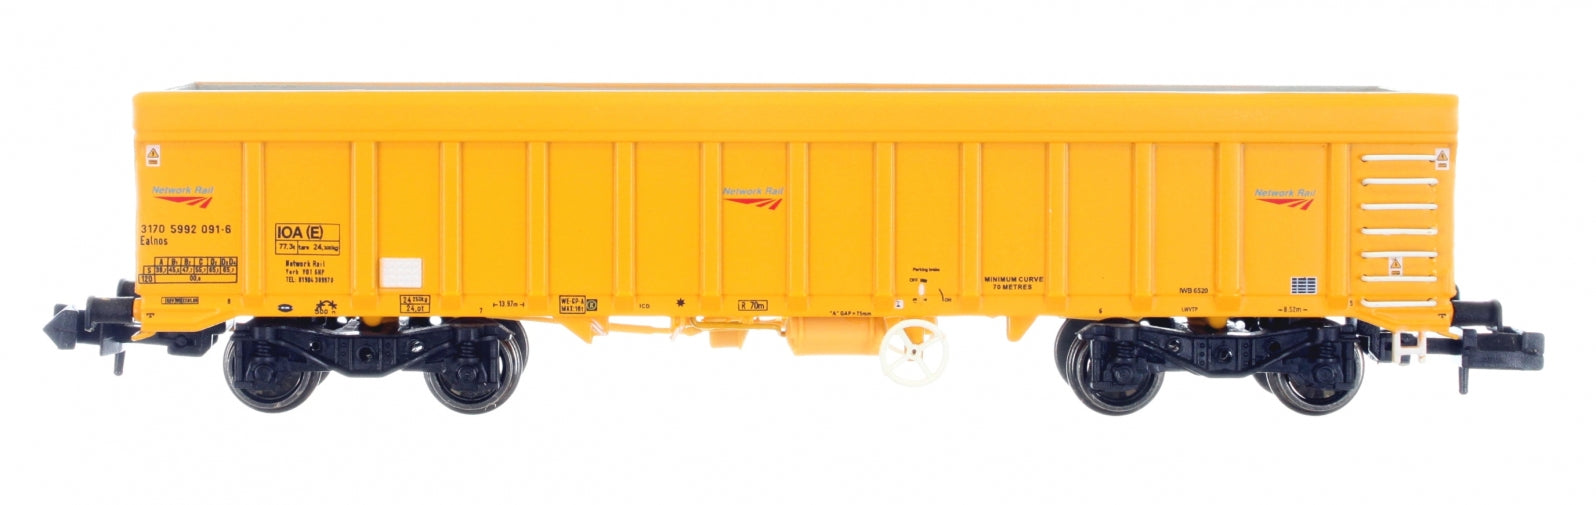 2F-045-011 N Gauge IOA Ballast Wagon Network Rail Yellow 3170 5992 091-6